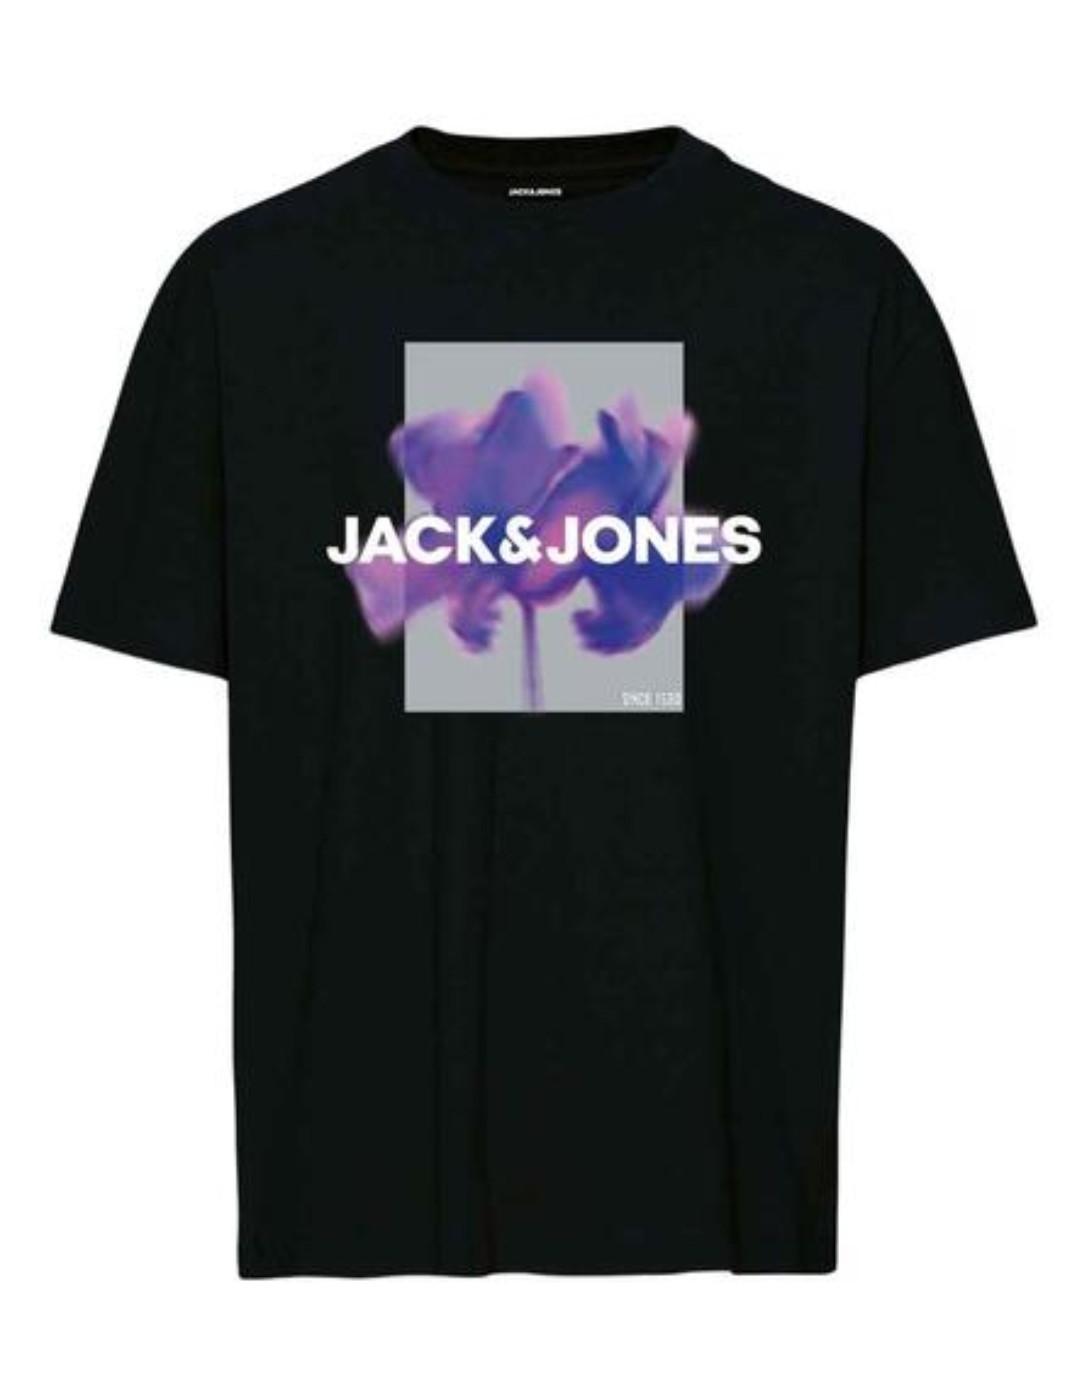 Camiseta Jack&Jones Junior Floral negro manga corta de niño